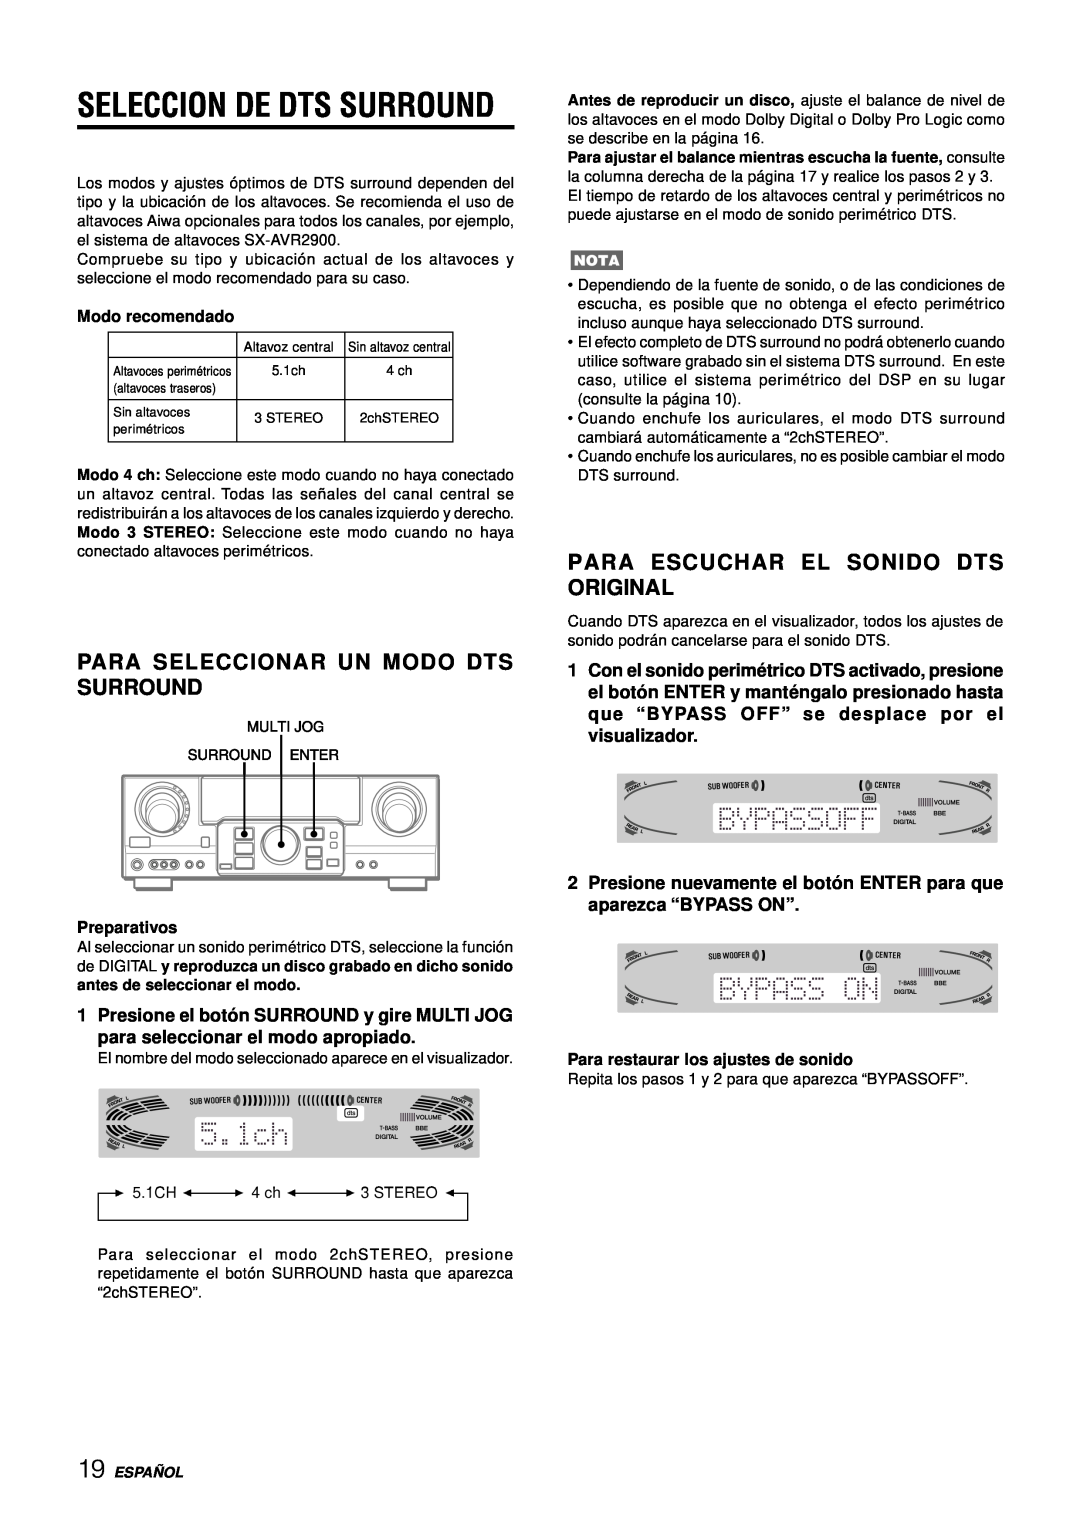 Aiwa AV-D97 manual Seleccion De Dts Surround, Para Seleccionar Un Modo Dts Surround, Para Escuchar El Sonido Dts Original 